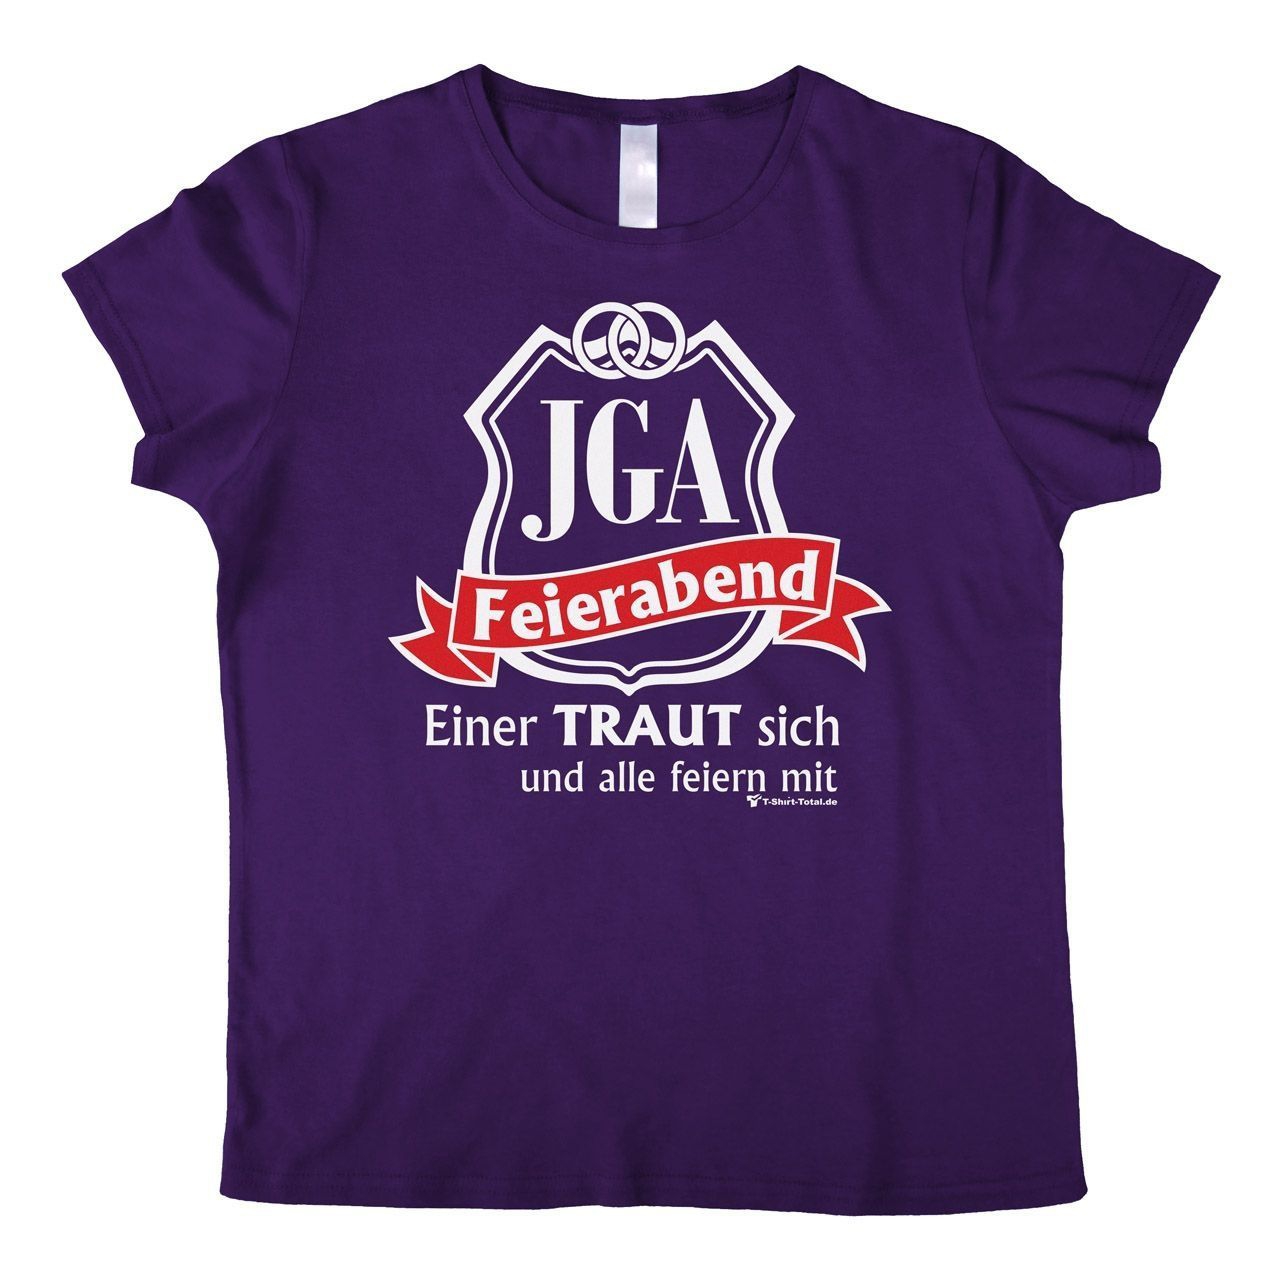 JGA Feierabend Woman T-Shirt lila Small